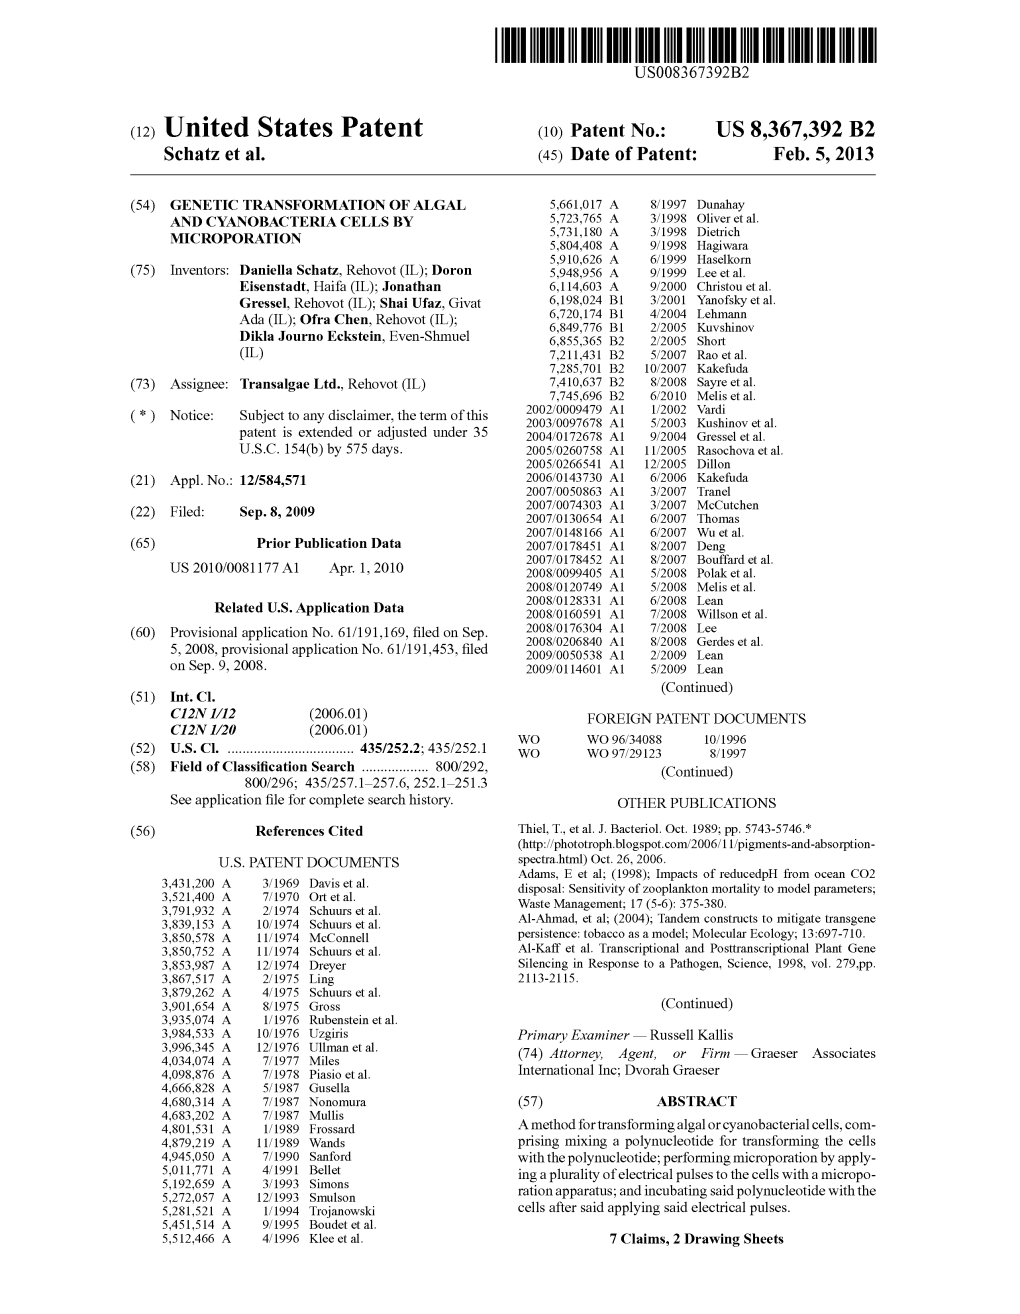 (12) United States Patent (10) Patent No.: US 8,367,392 B2 Schatz Et Al